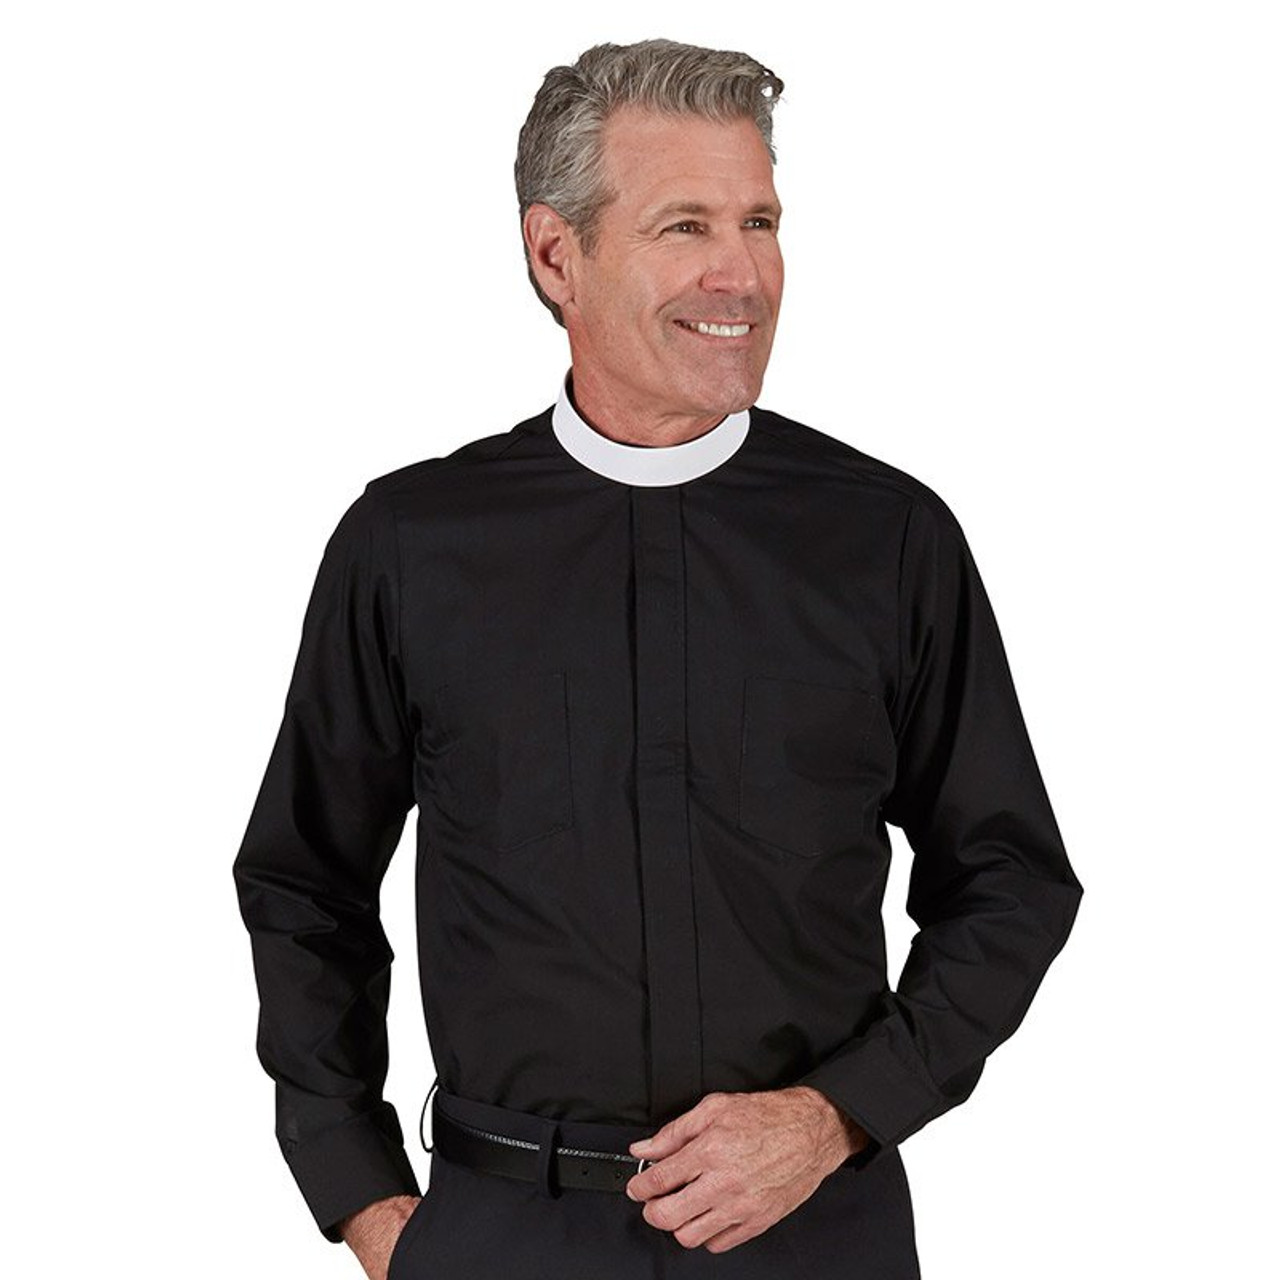 Clerical Shirt Neckband Collar Black Size 18-36/37